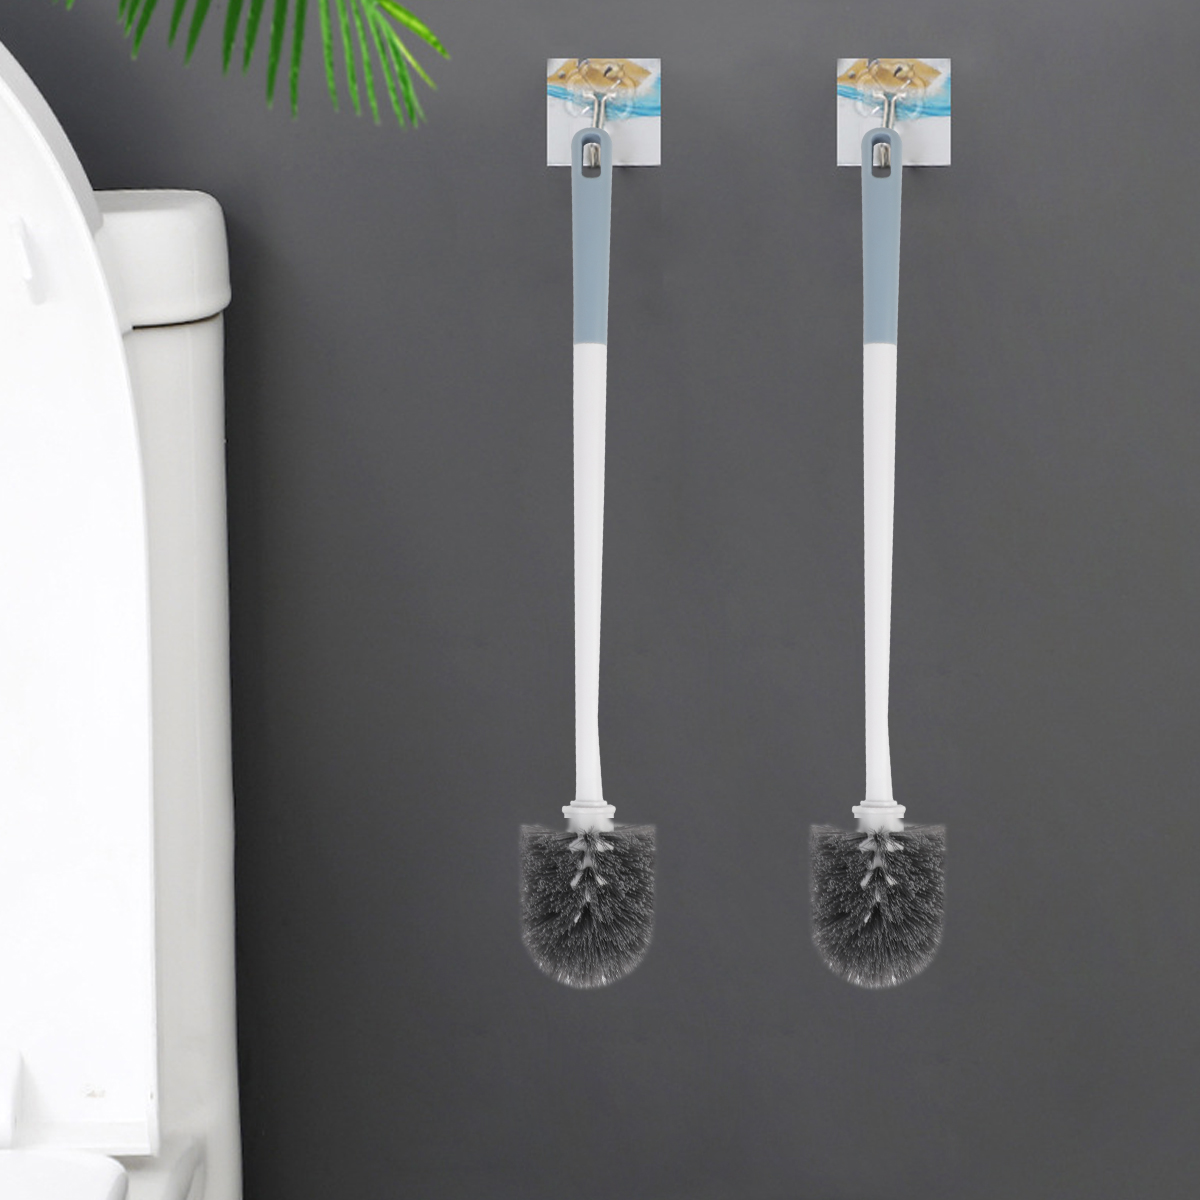 Long Handle Eco Plastic Toilet Brush Cleaner, Replaceable Head,Non-Scratch PP Bristles